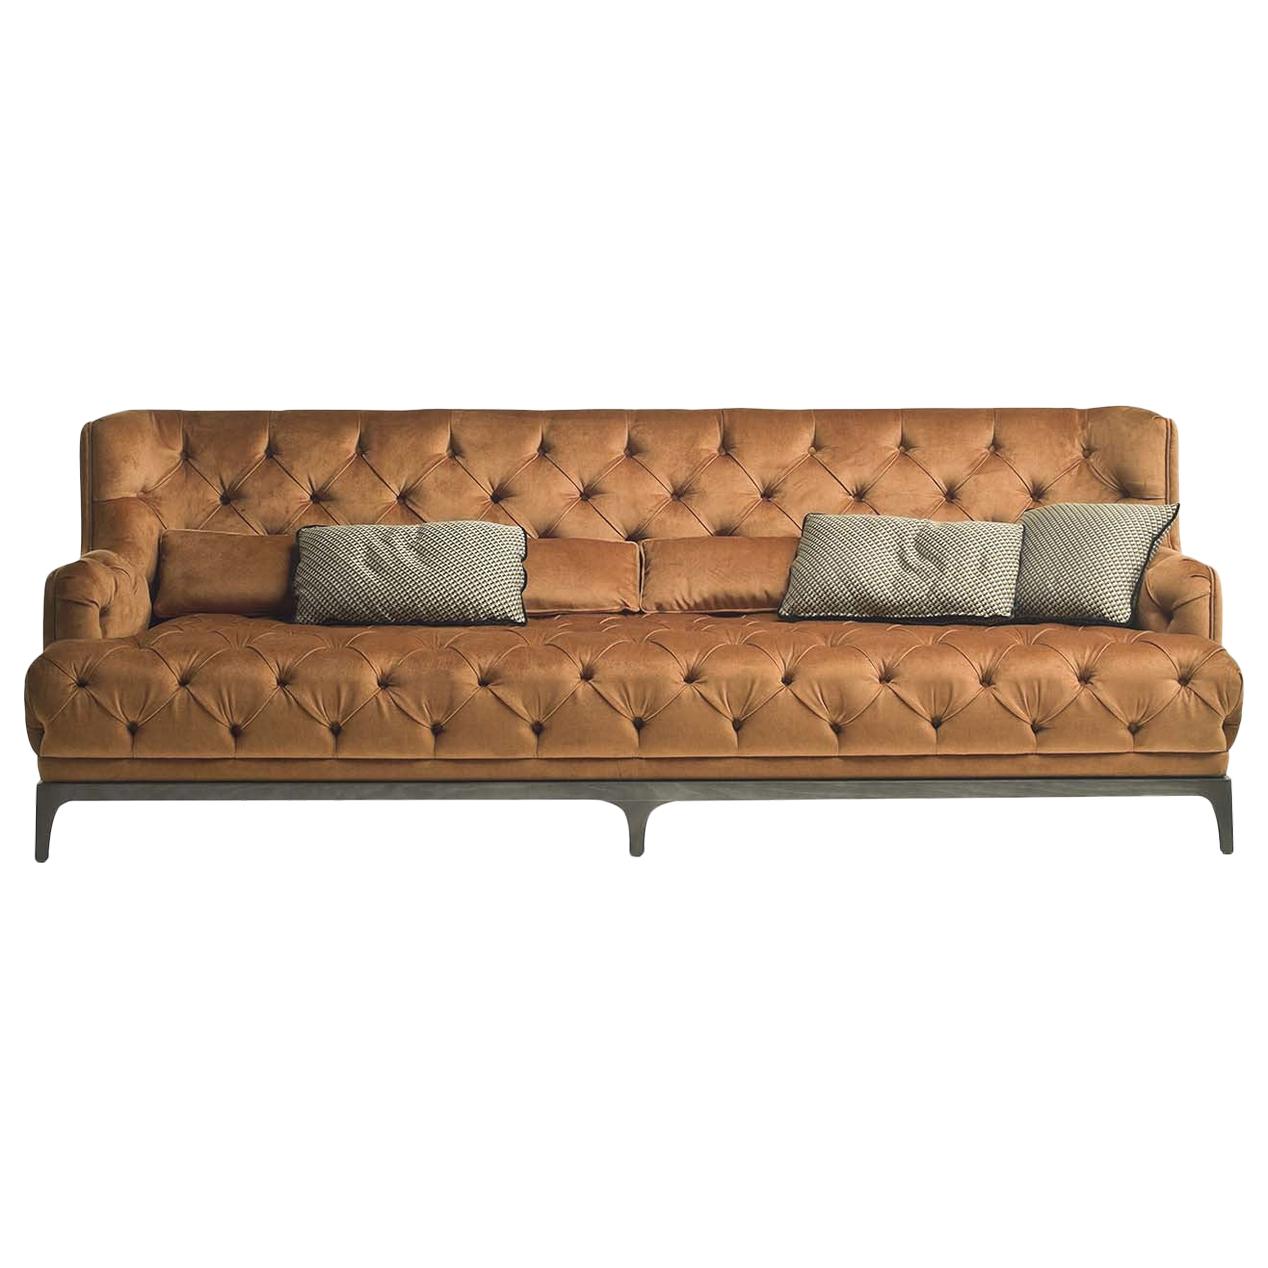 Kingman Sofa For Sale